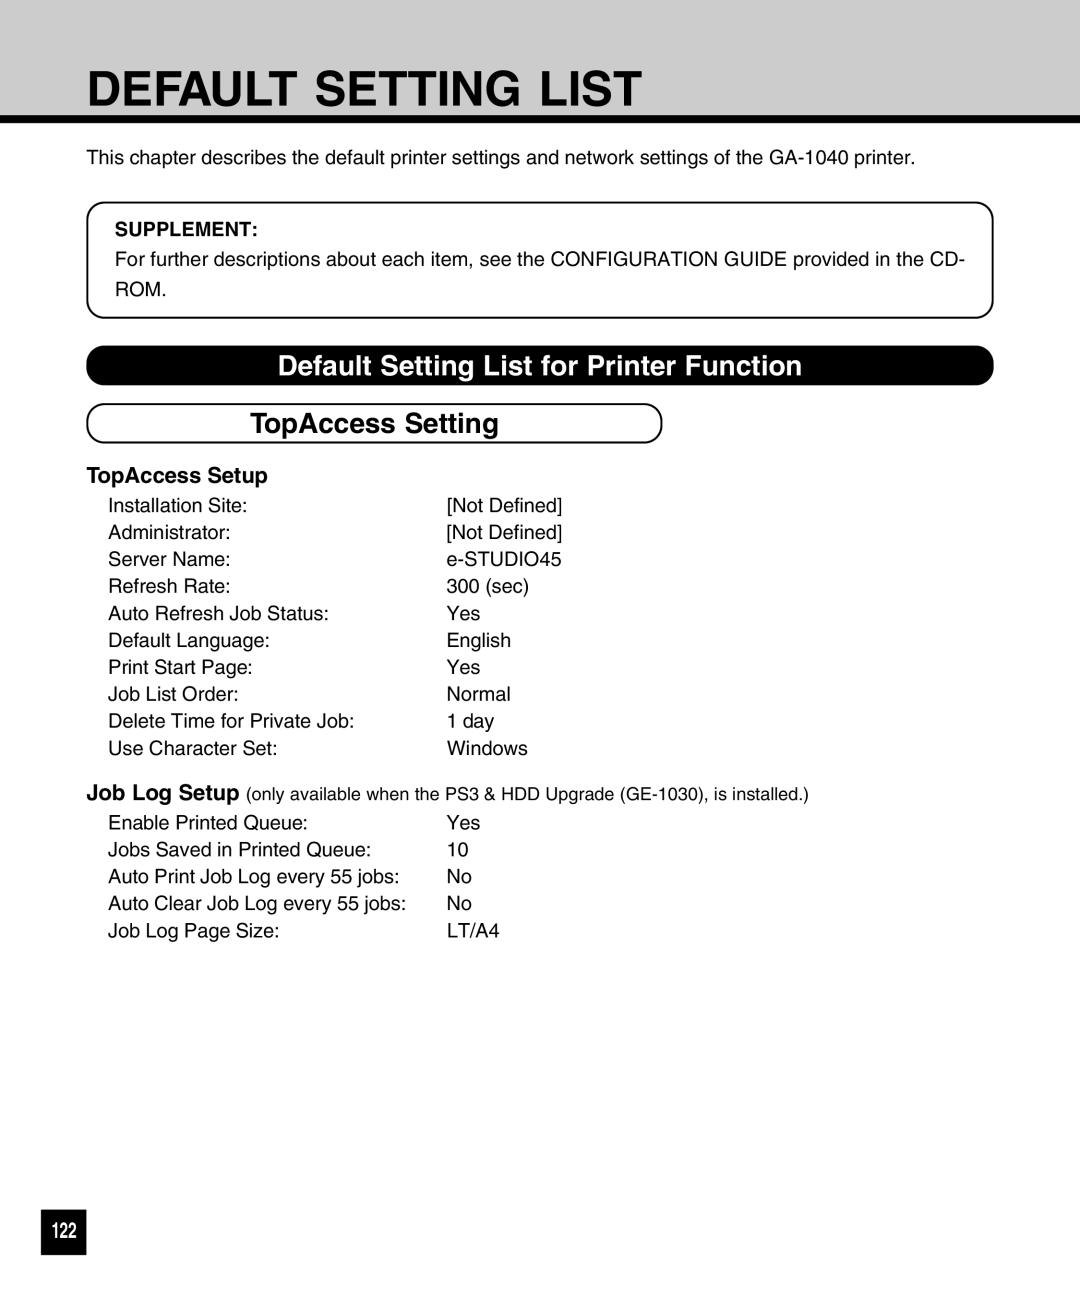 Toshiba GA-1040 manual Default Setting List for Printer Function, TopAccess Setting, TopAccess Setup, Supplement 